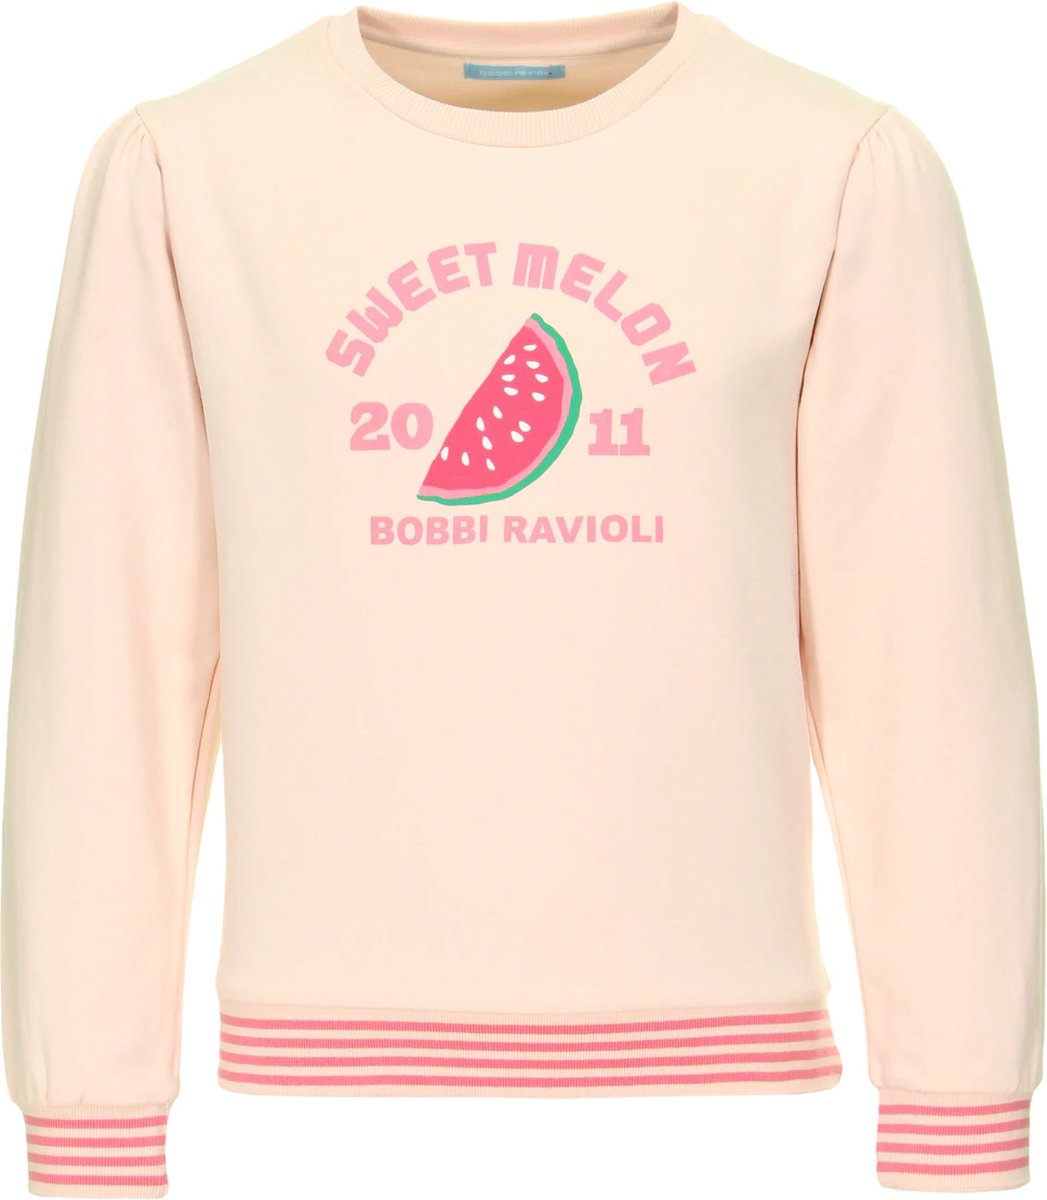 Bobbi Ravioli - Sweater - Christal pink - Maat 98/104